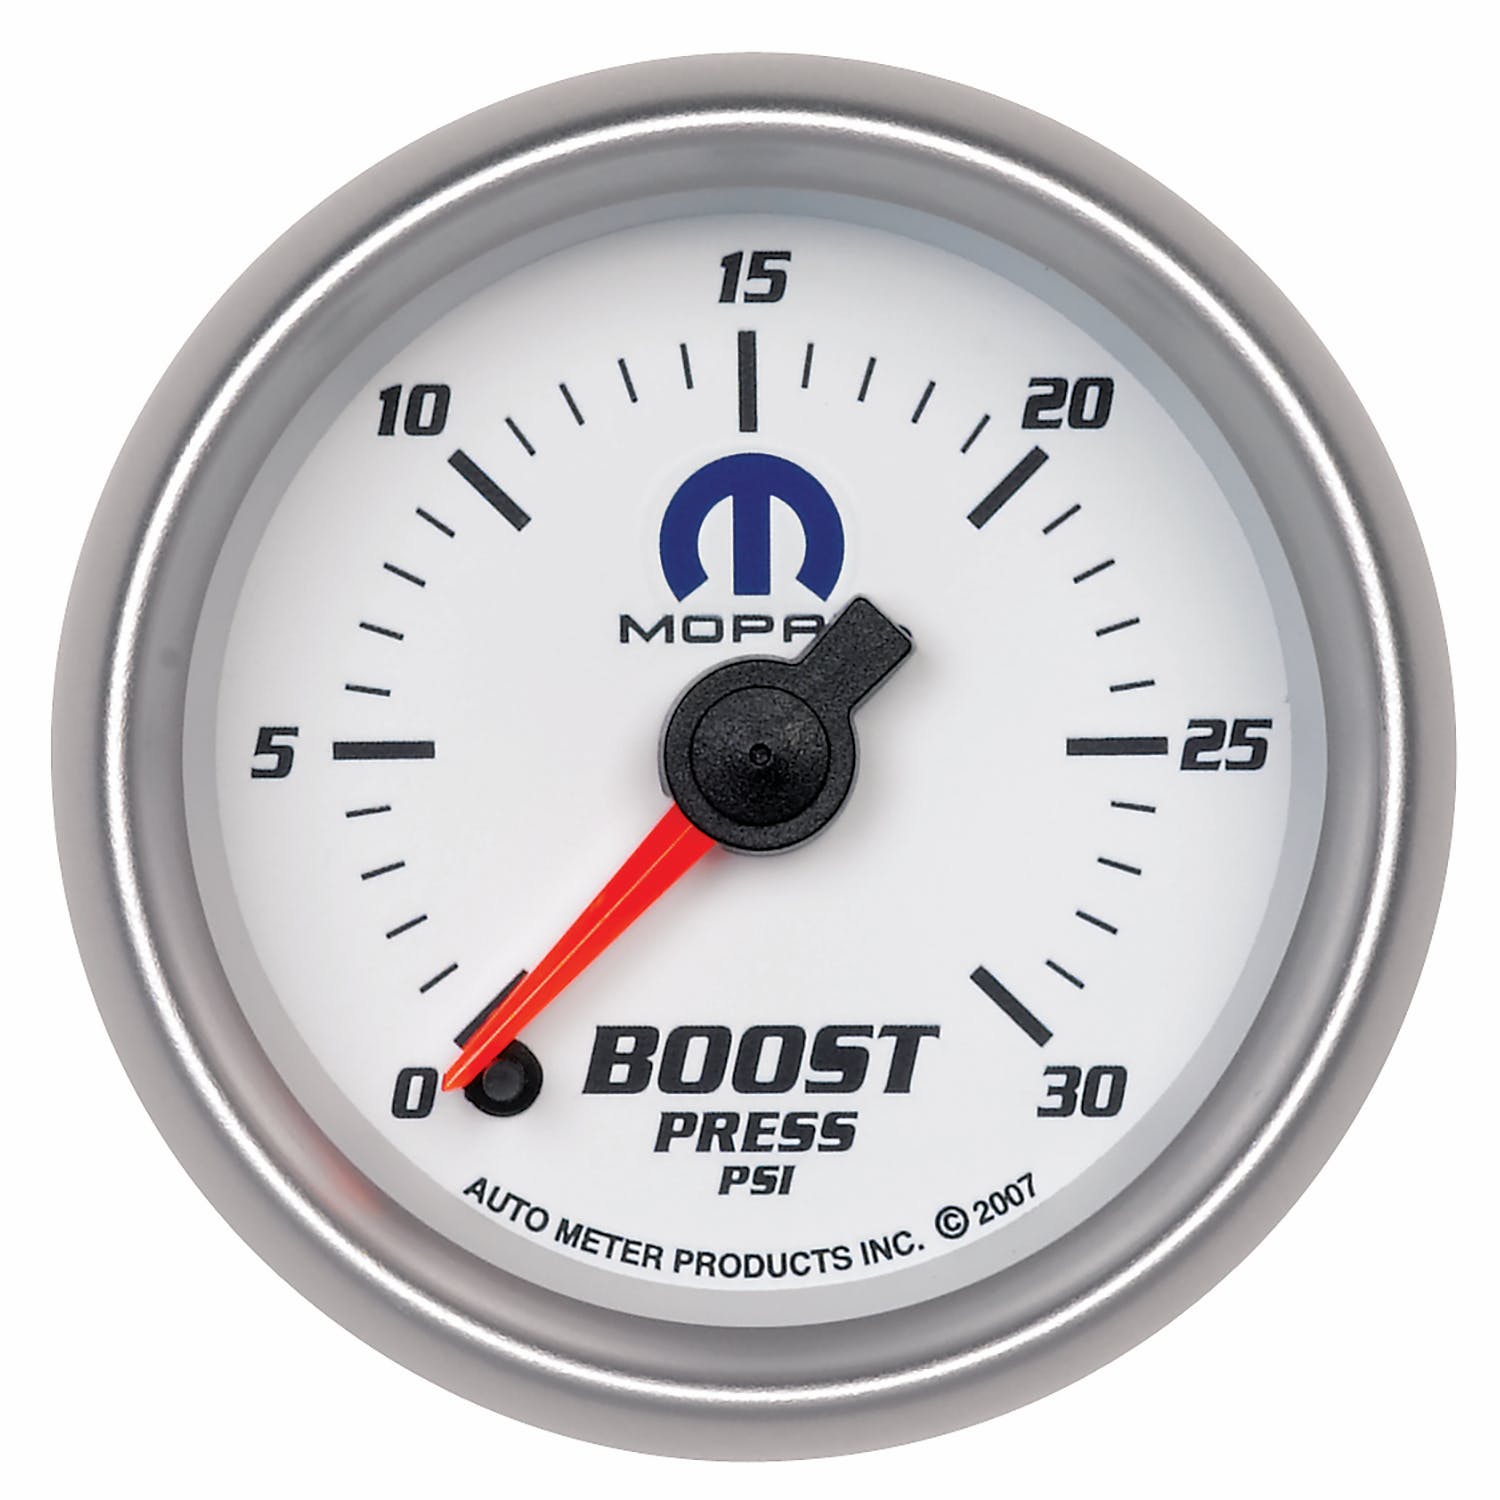 AutoMeter Products 880034 Mopar #77060060, 2-1/16 Boost, 0-30 PSI, FSE